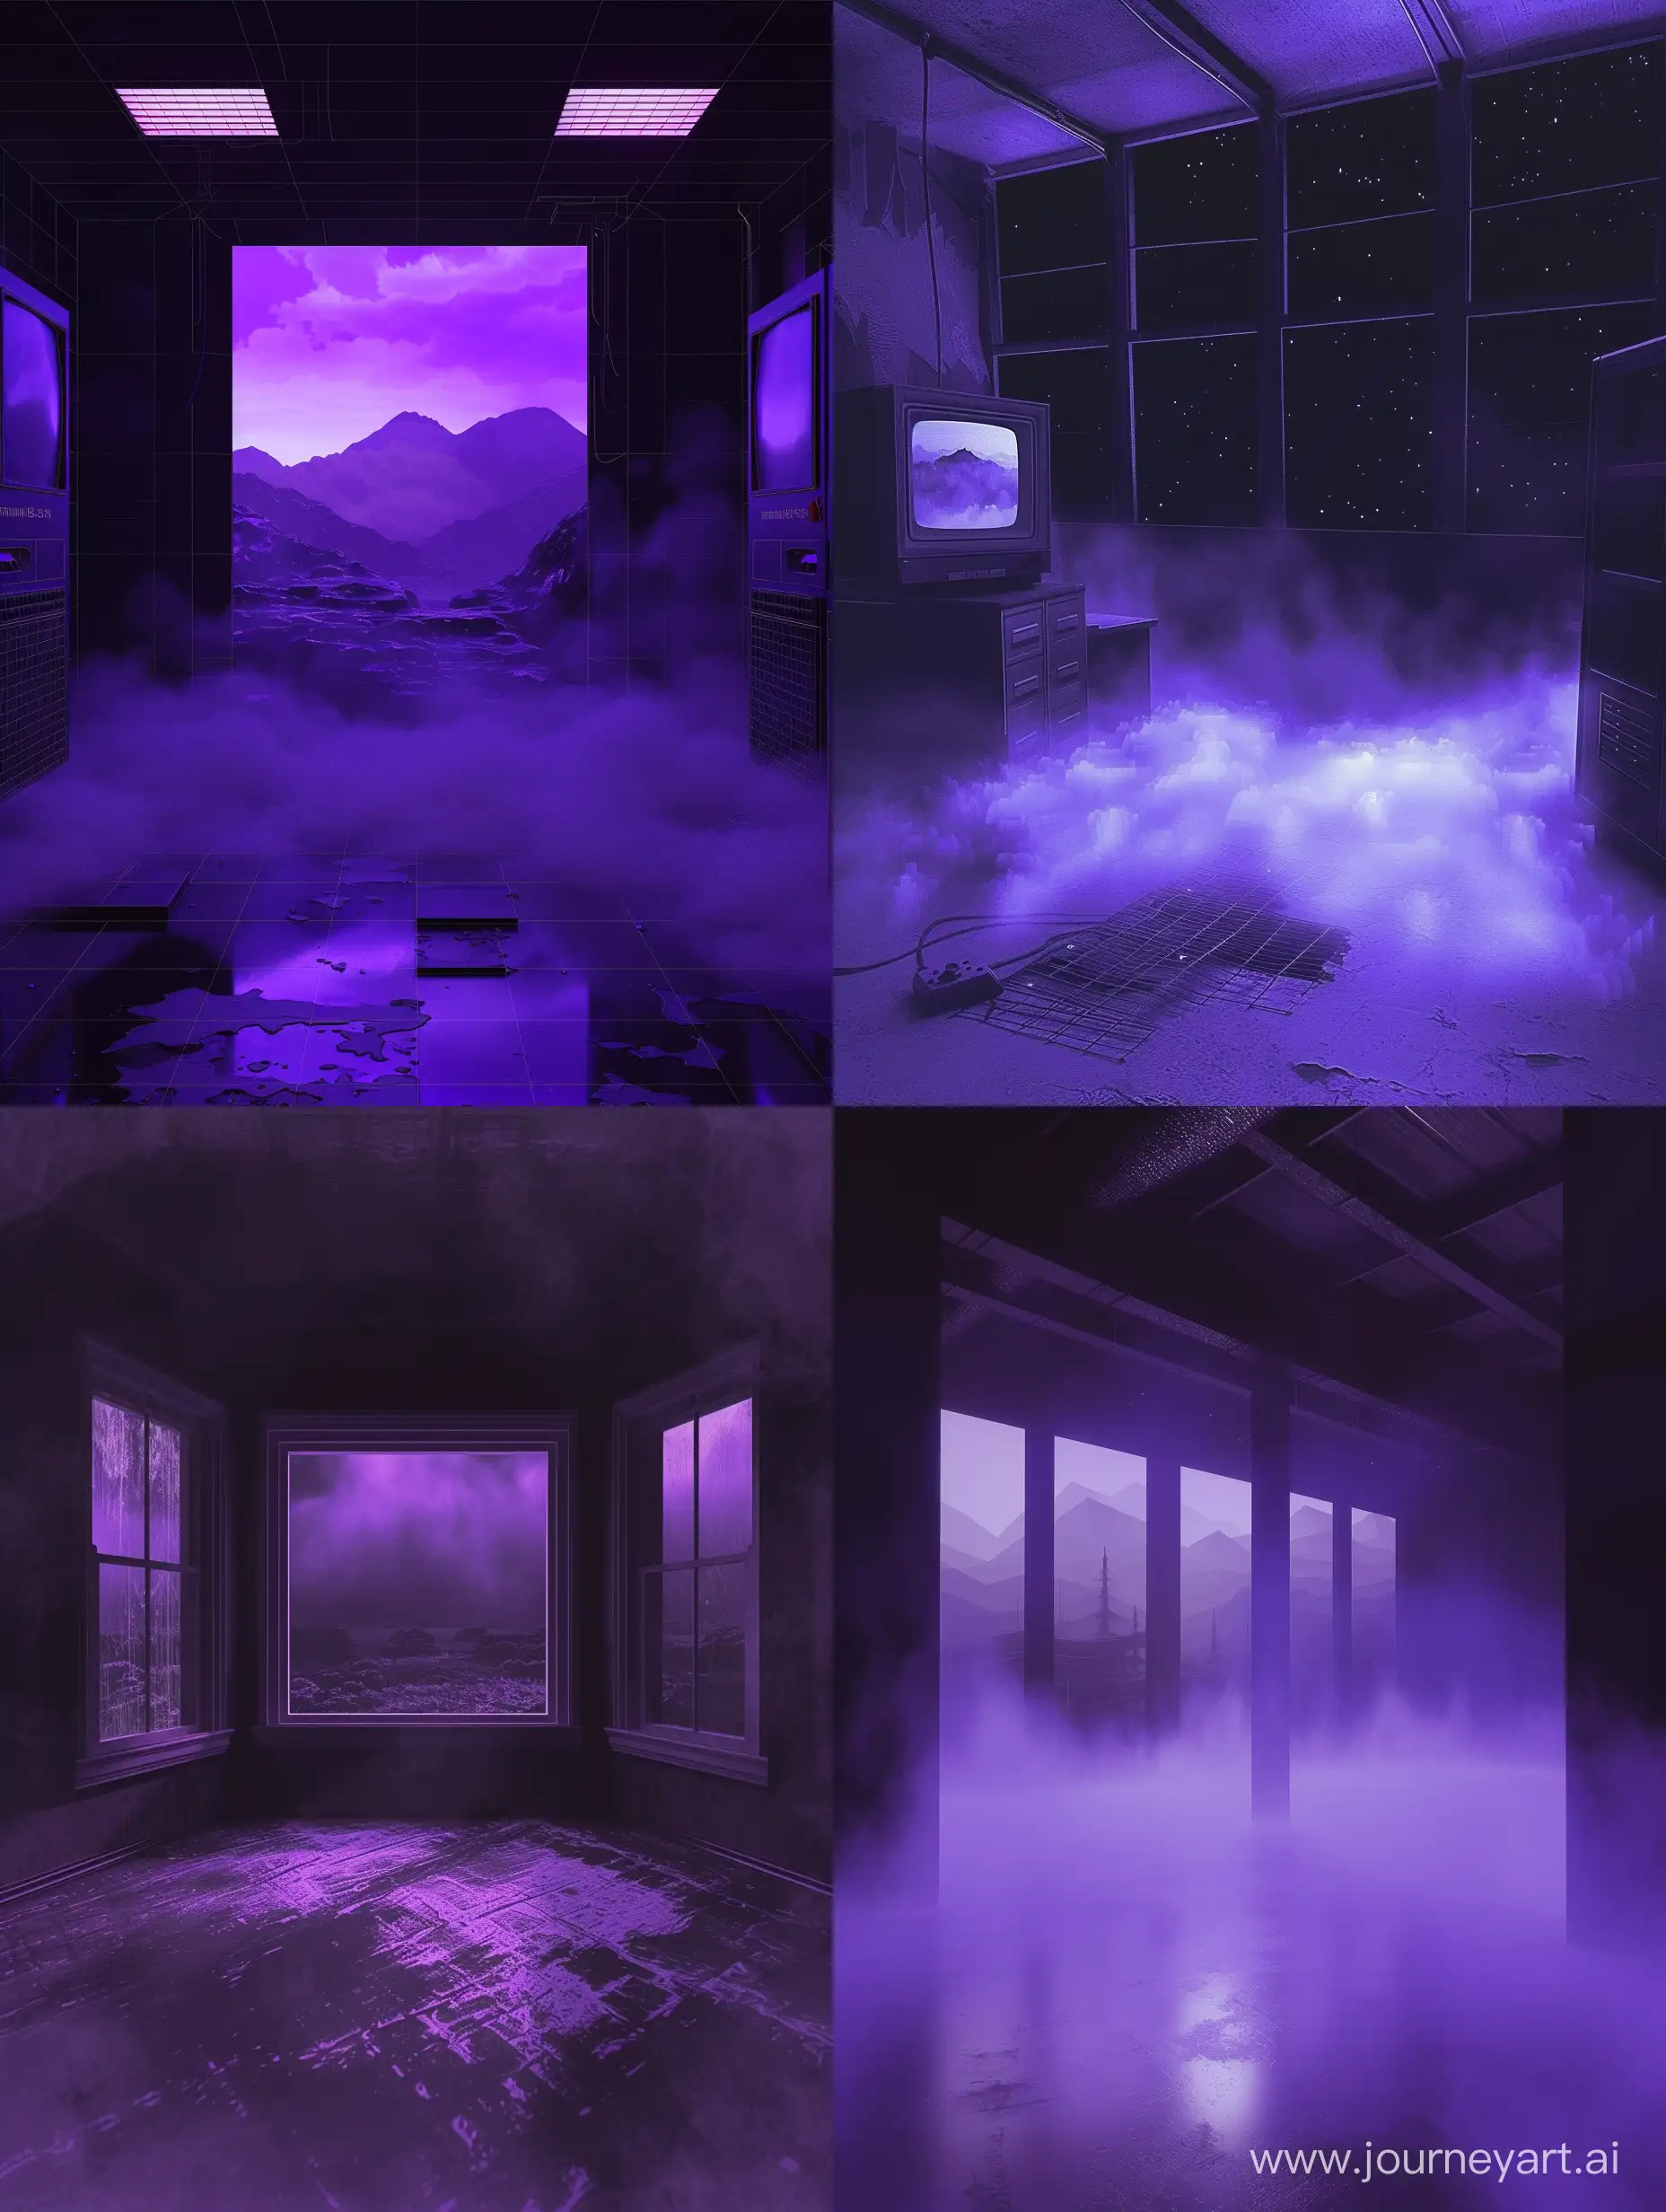 black white purple 2000s video game empty room landscape scene, nostalgia, nighttime, fog, haunting, low poly, computer graphics, digital glitch, nintendo 64 graphics